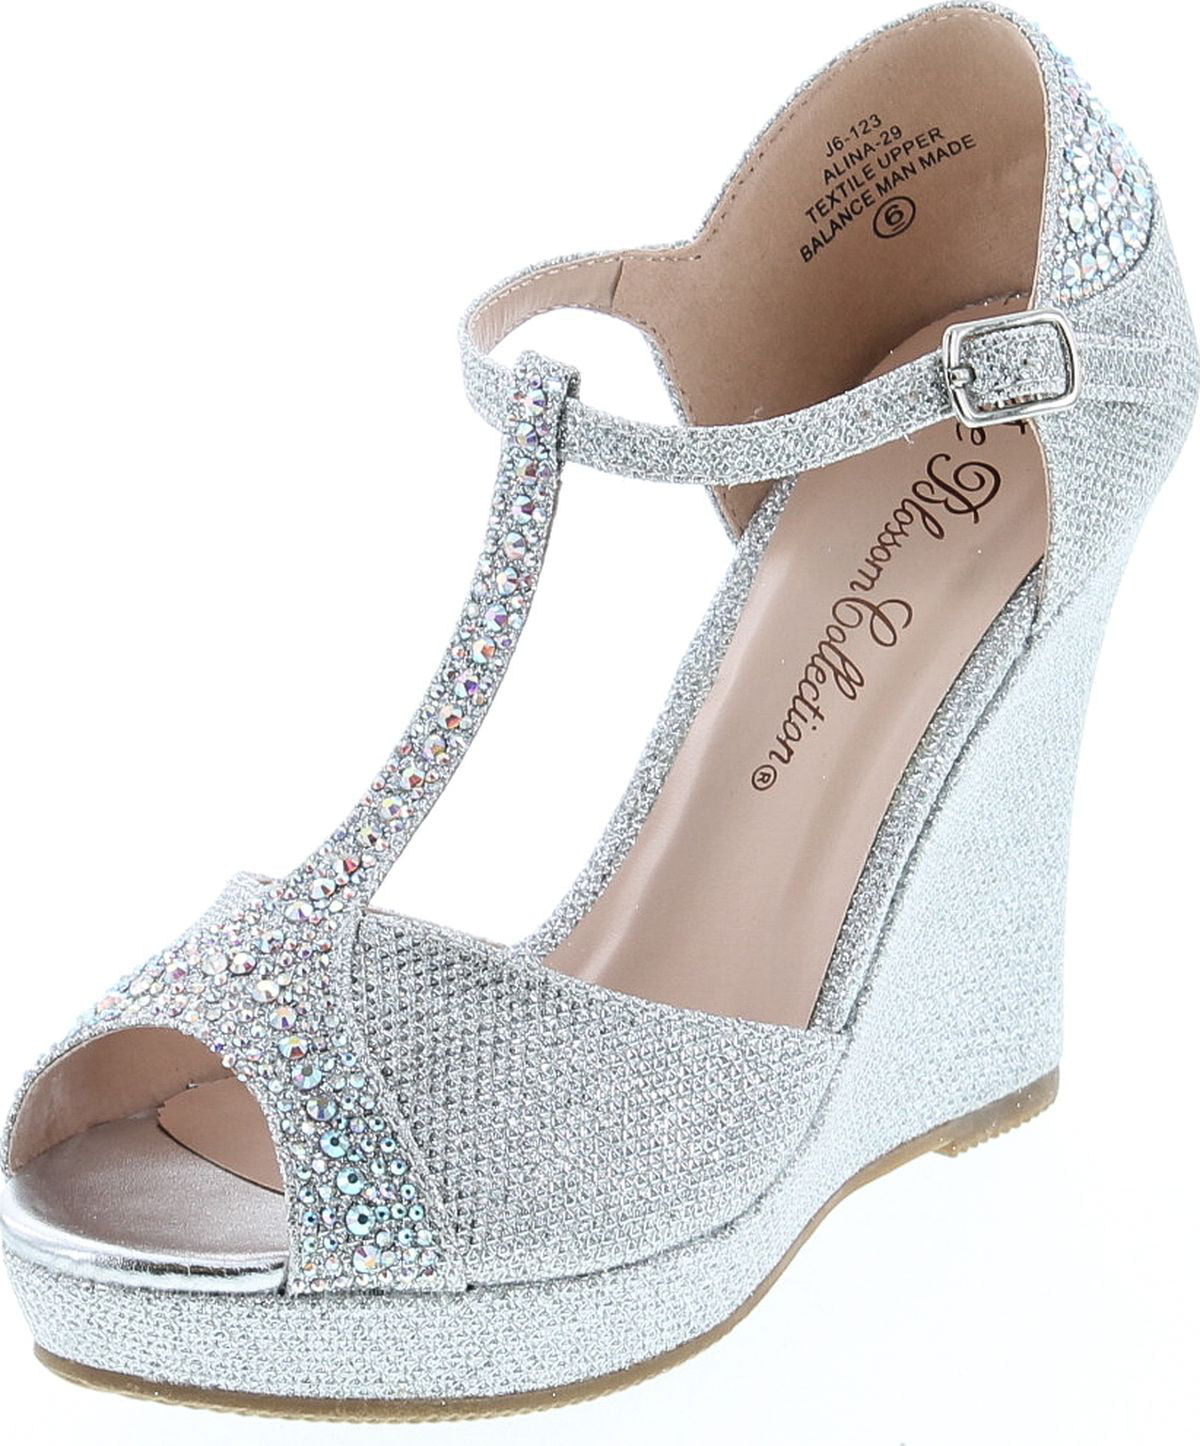 De Blossom Collection Platform Pump Heel Wedding Bridal Prom Shoe Size 7.5